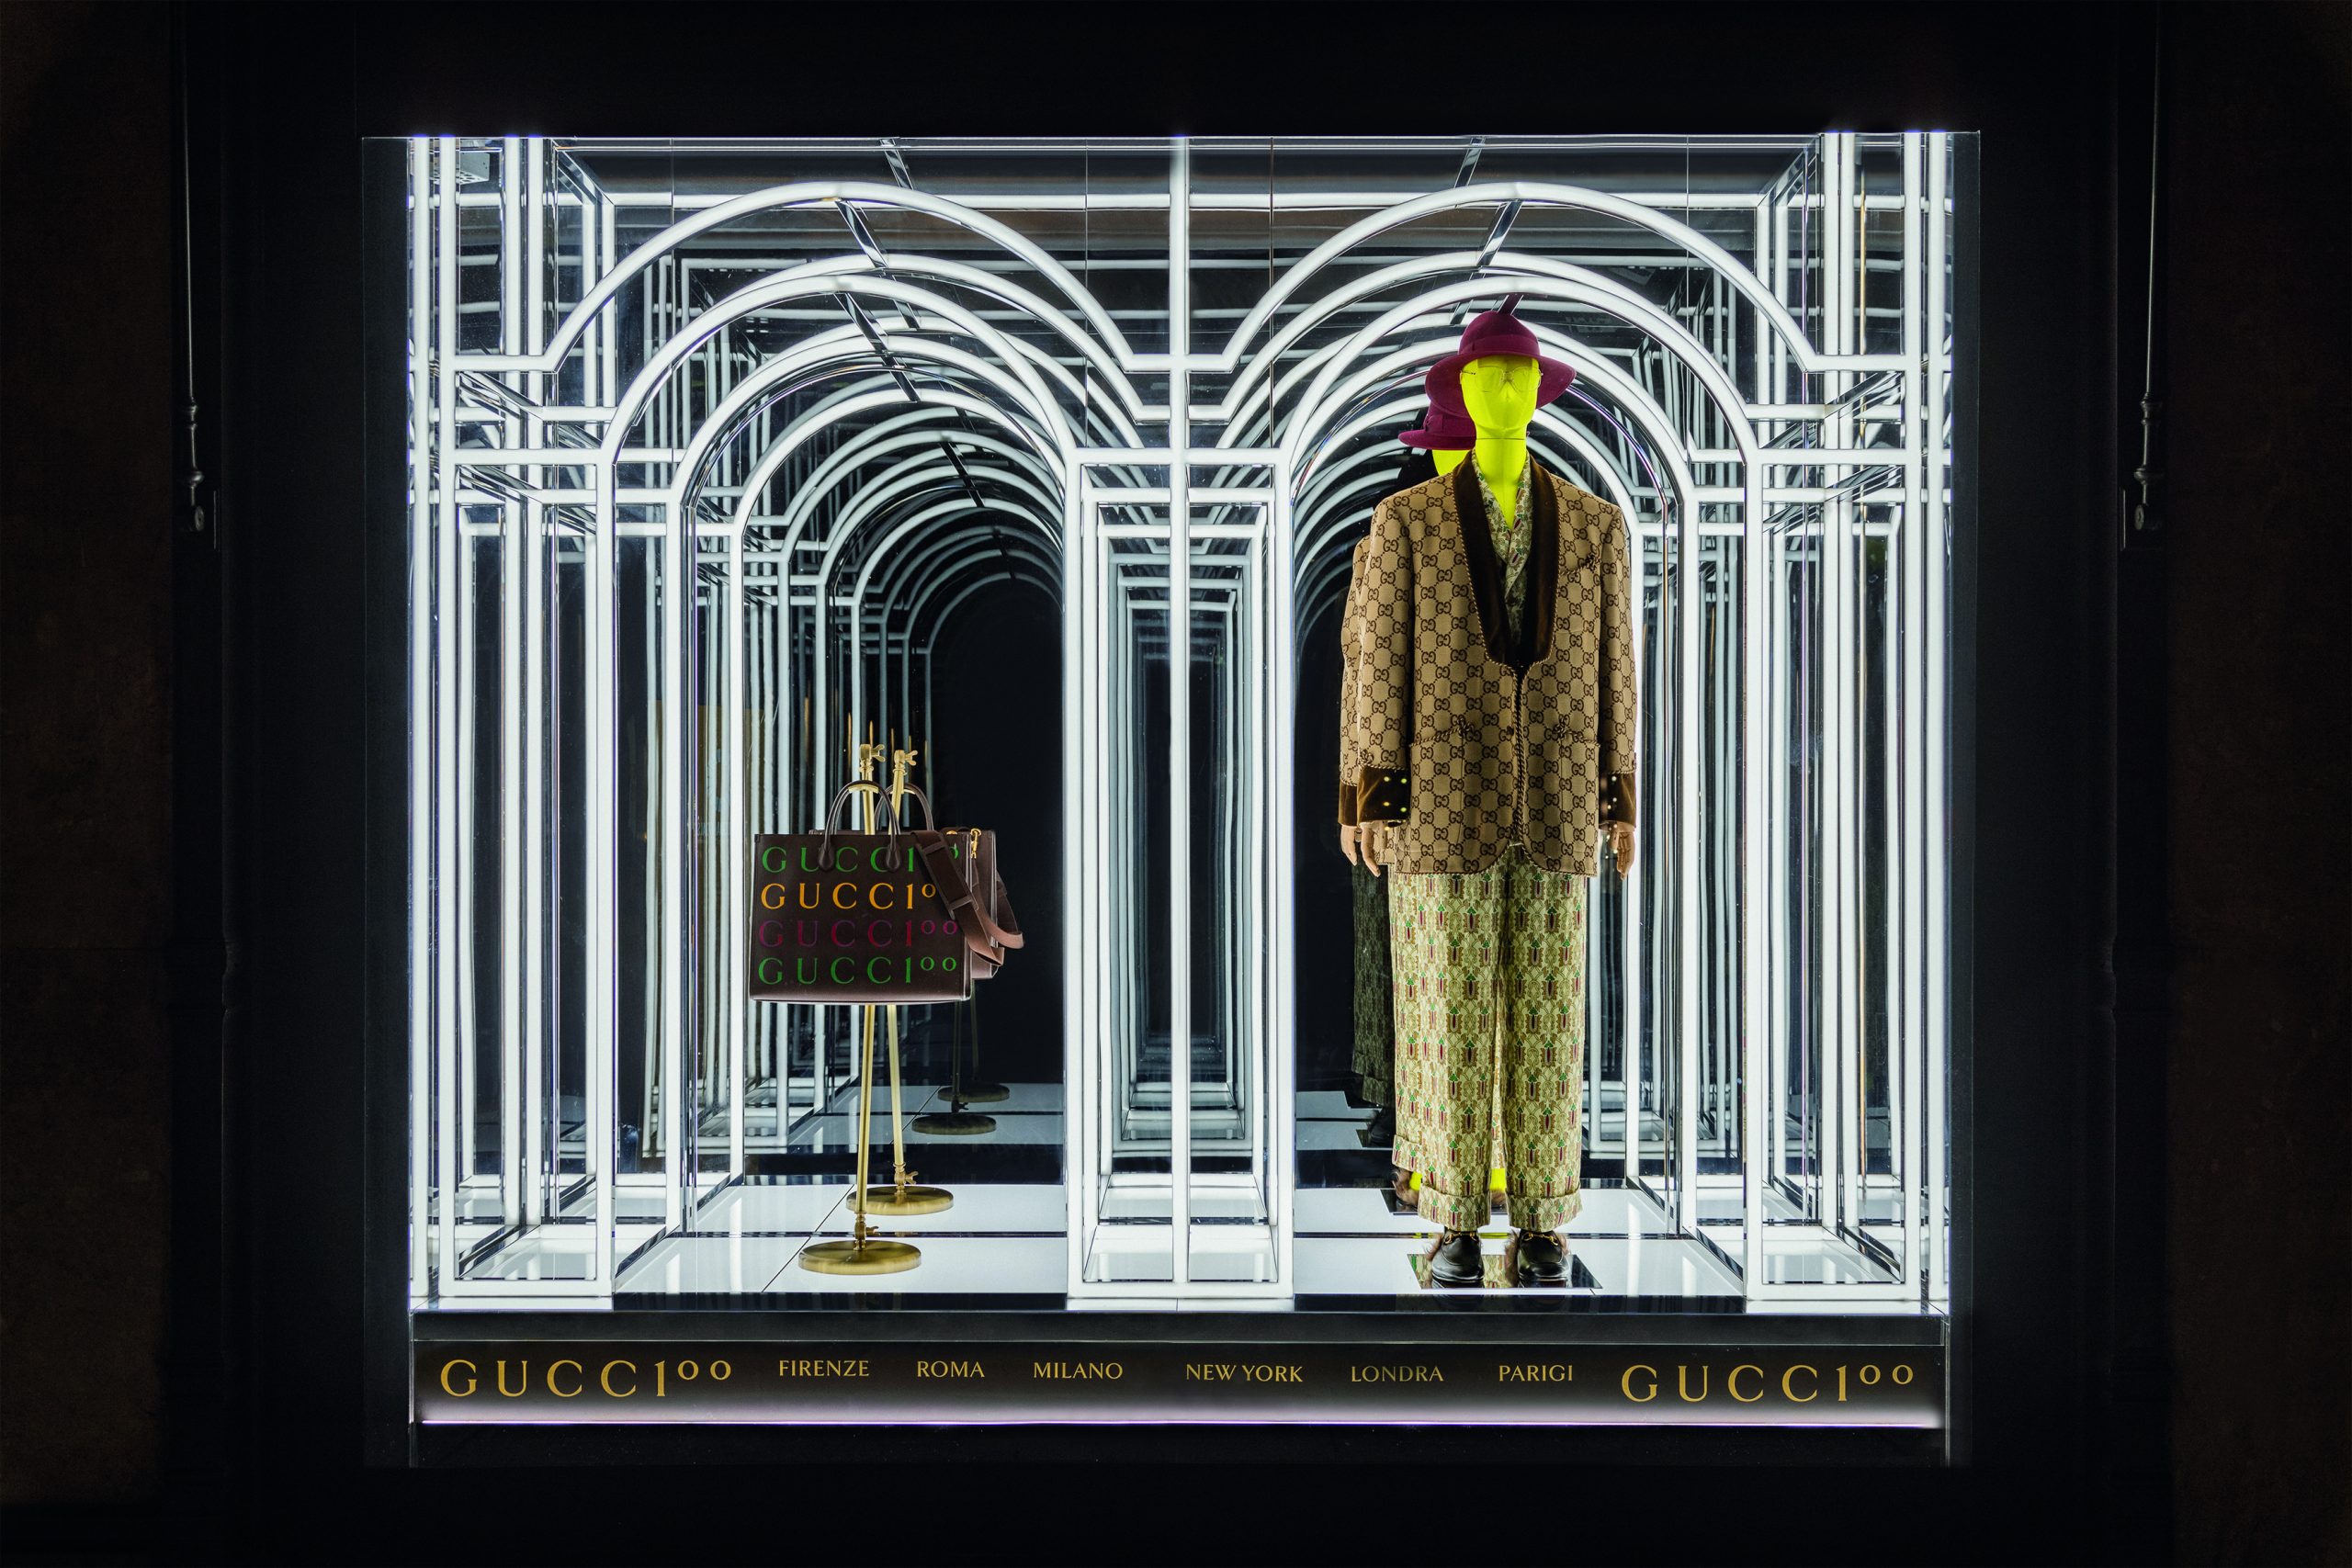 Gucci Host Pop-up in Houston Galleria until July 12